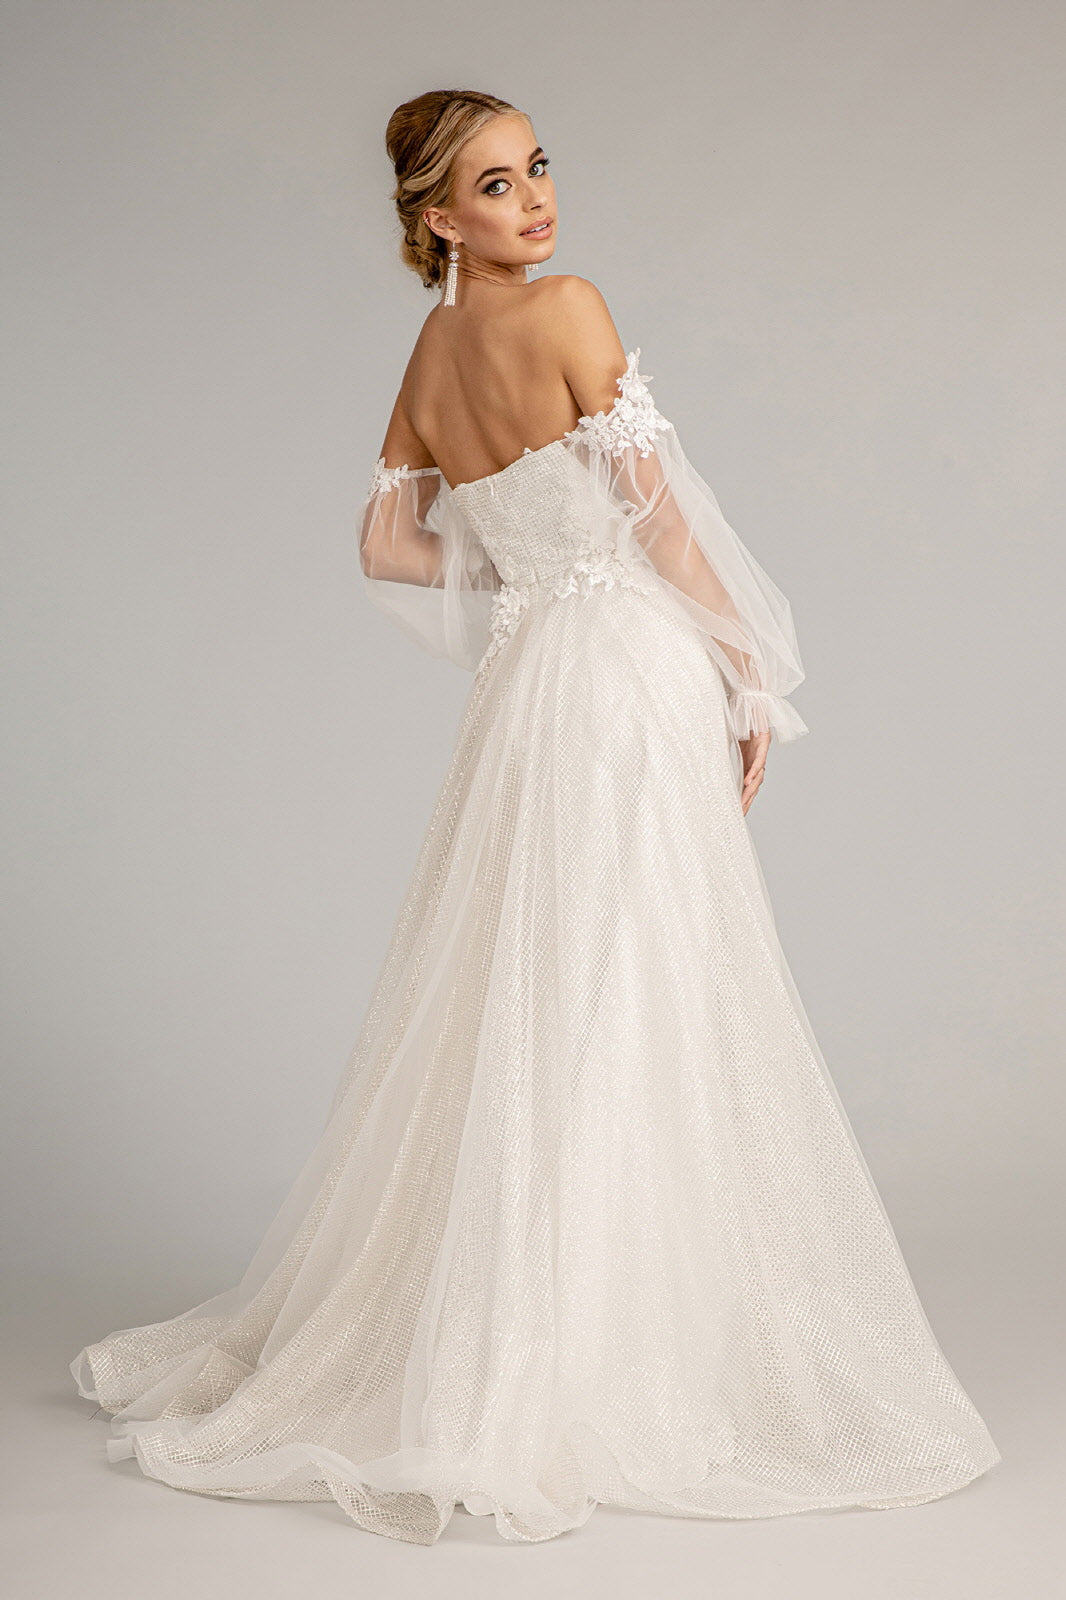 3-D Flower Embellished Glitter Netting A-line Dress Detached Long Sleeves GLGL3015 Elsy Style PROM